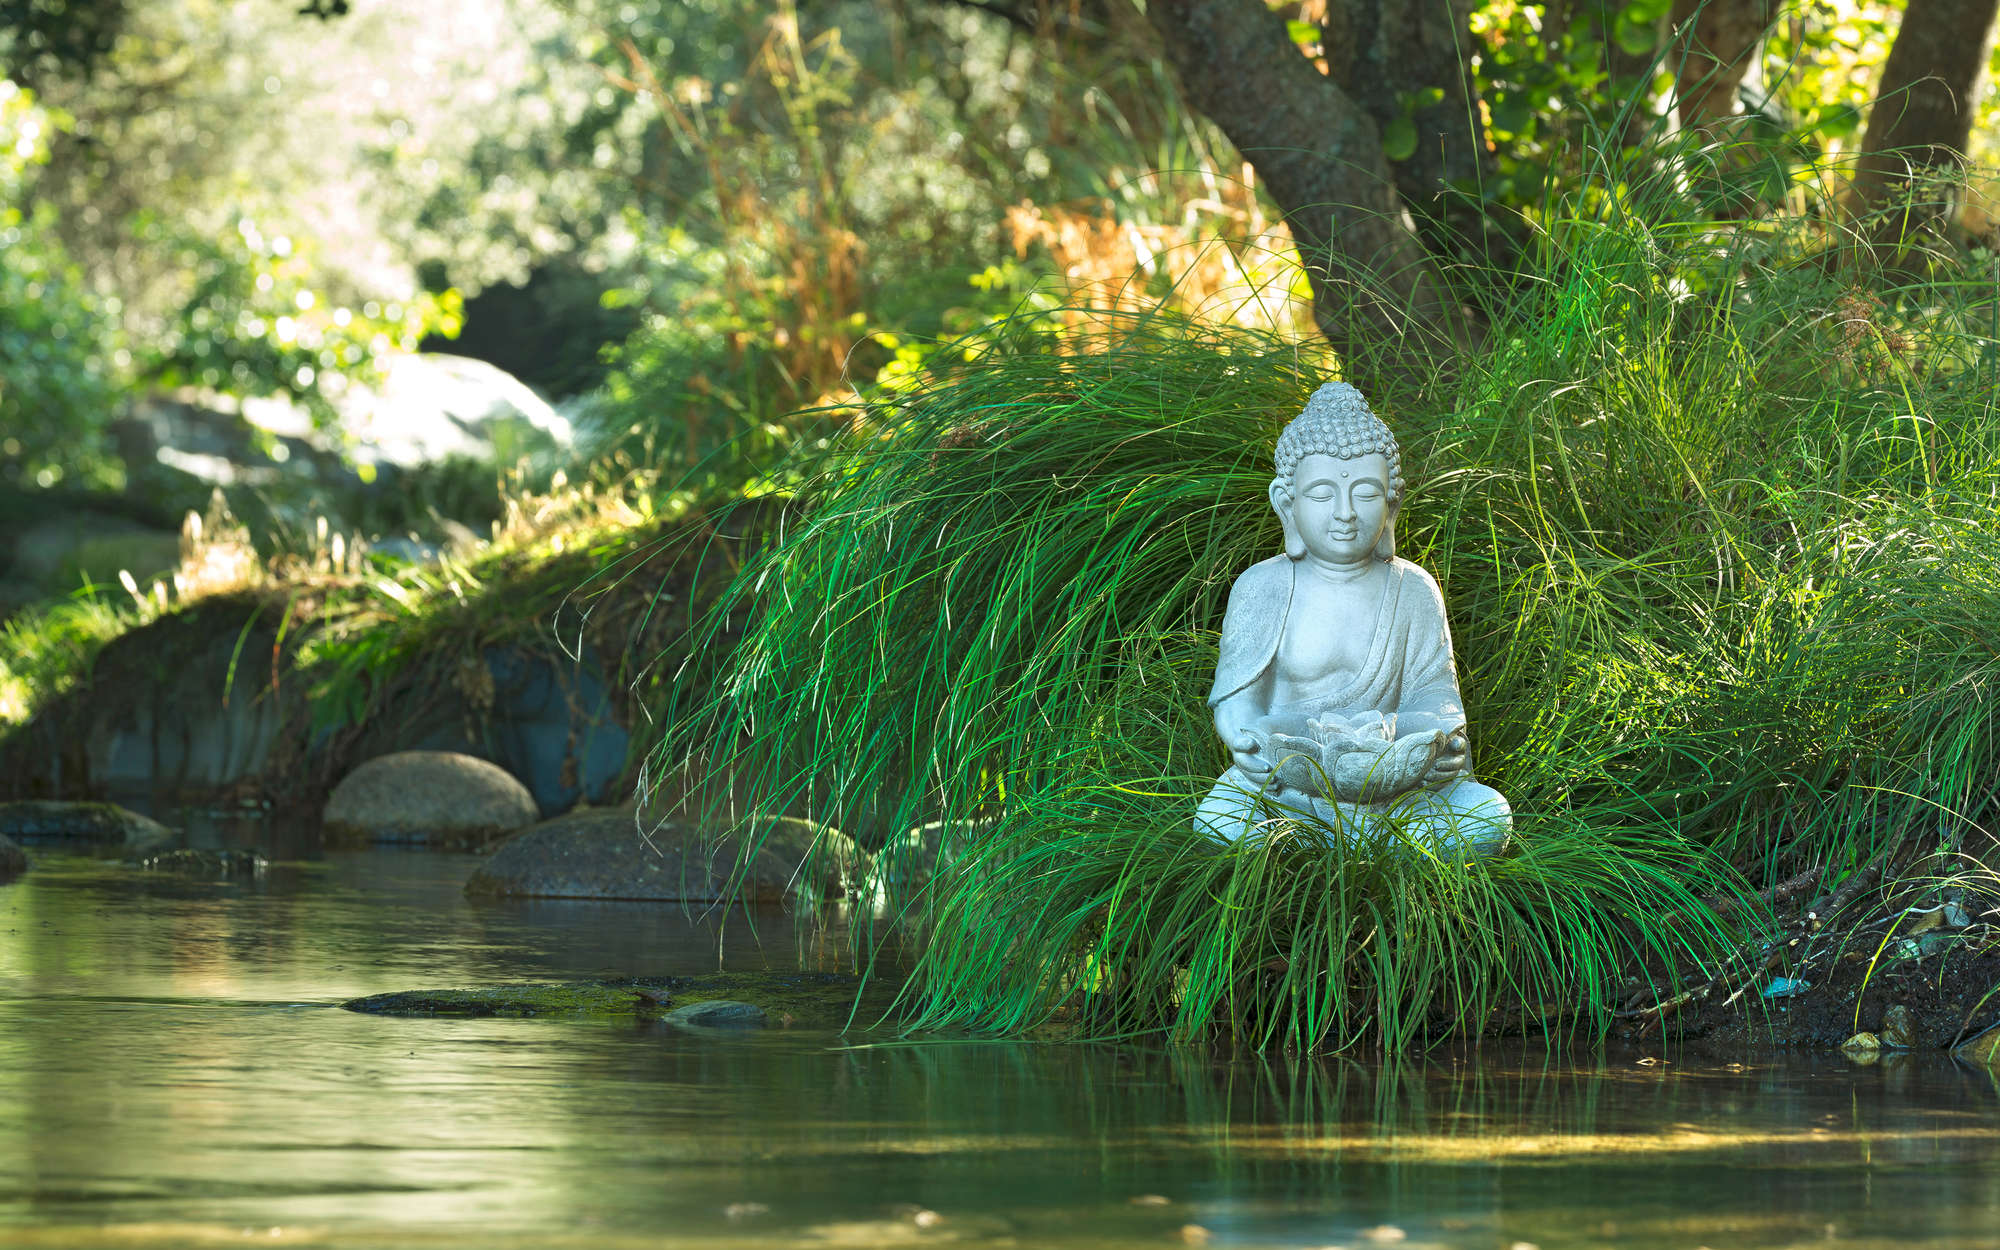             Photo wallpaper Buddha Statue on the Riverbank - Matt Smooth Non-woven
        